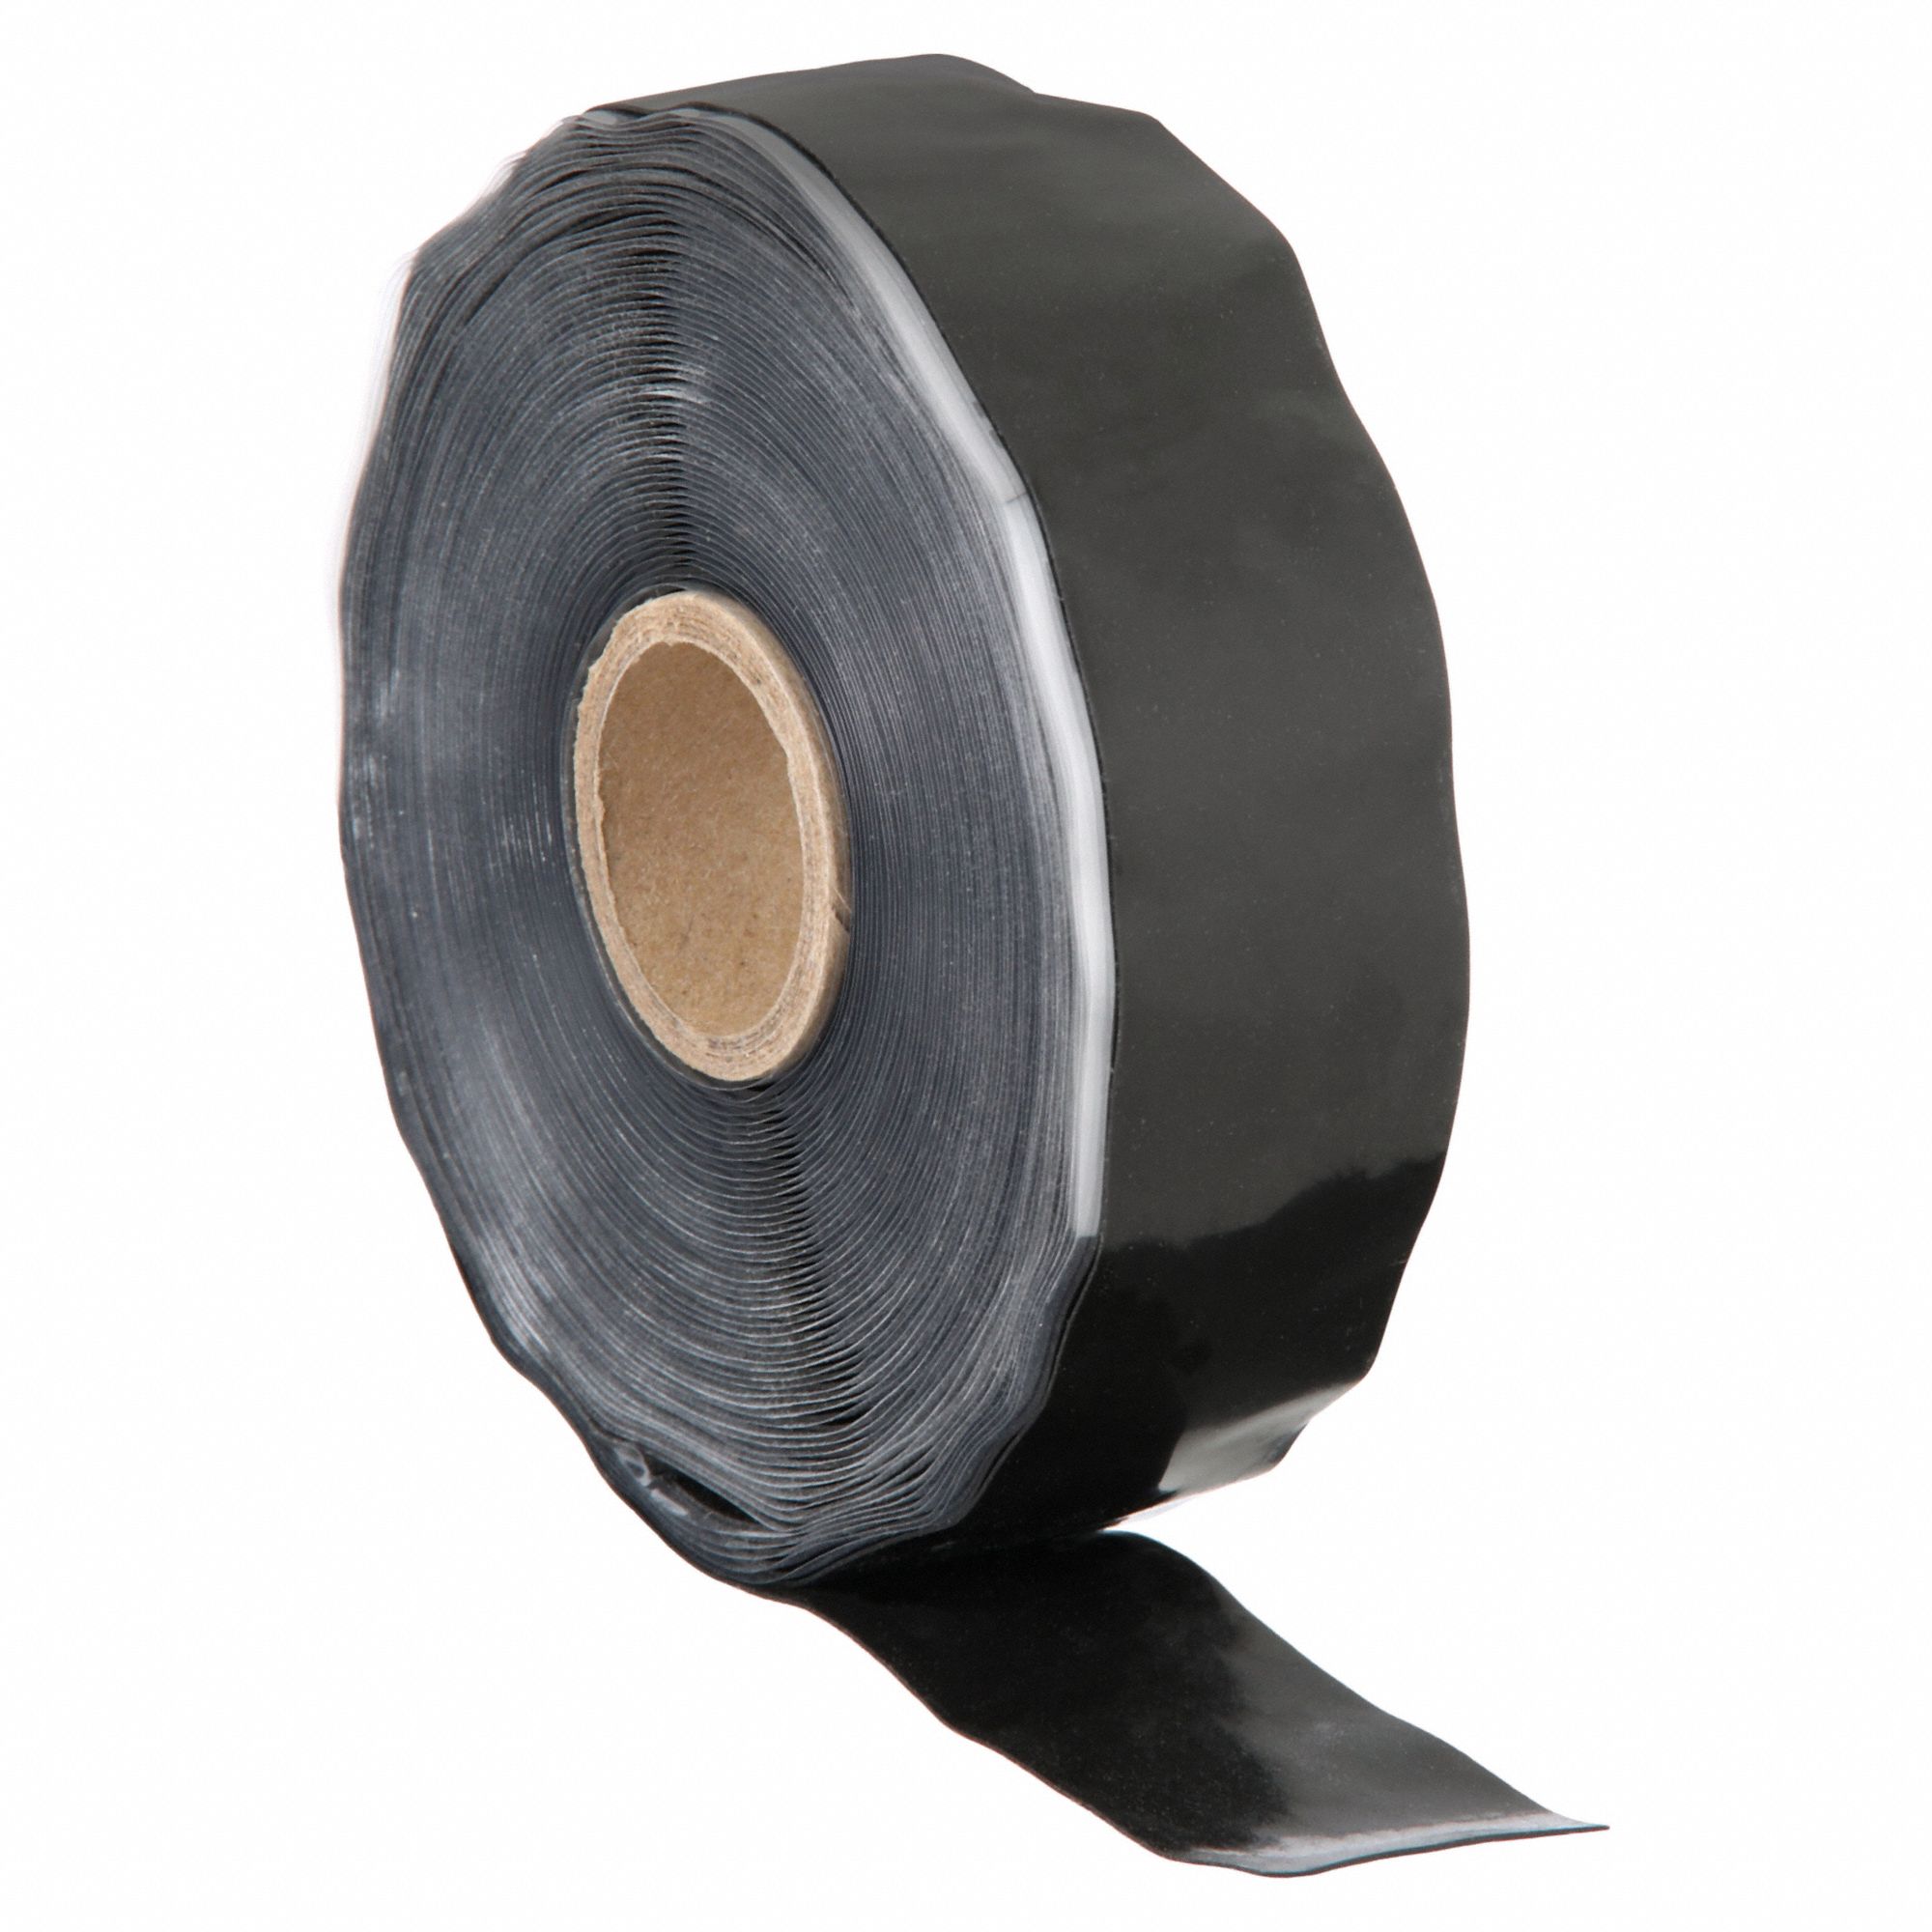 Shurtape Gray Duct Tape 2 x 60 Yards (48 mm x 55 m) - General Purpose